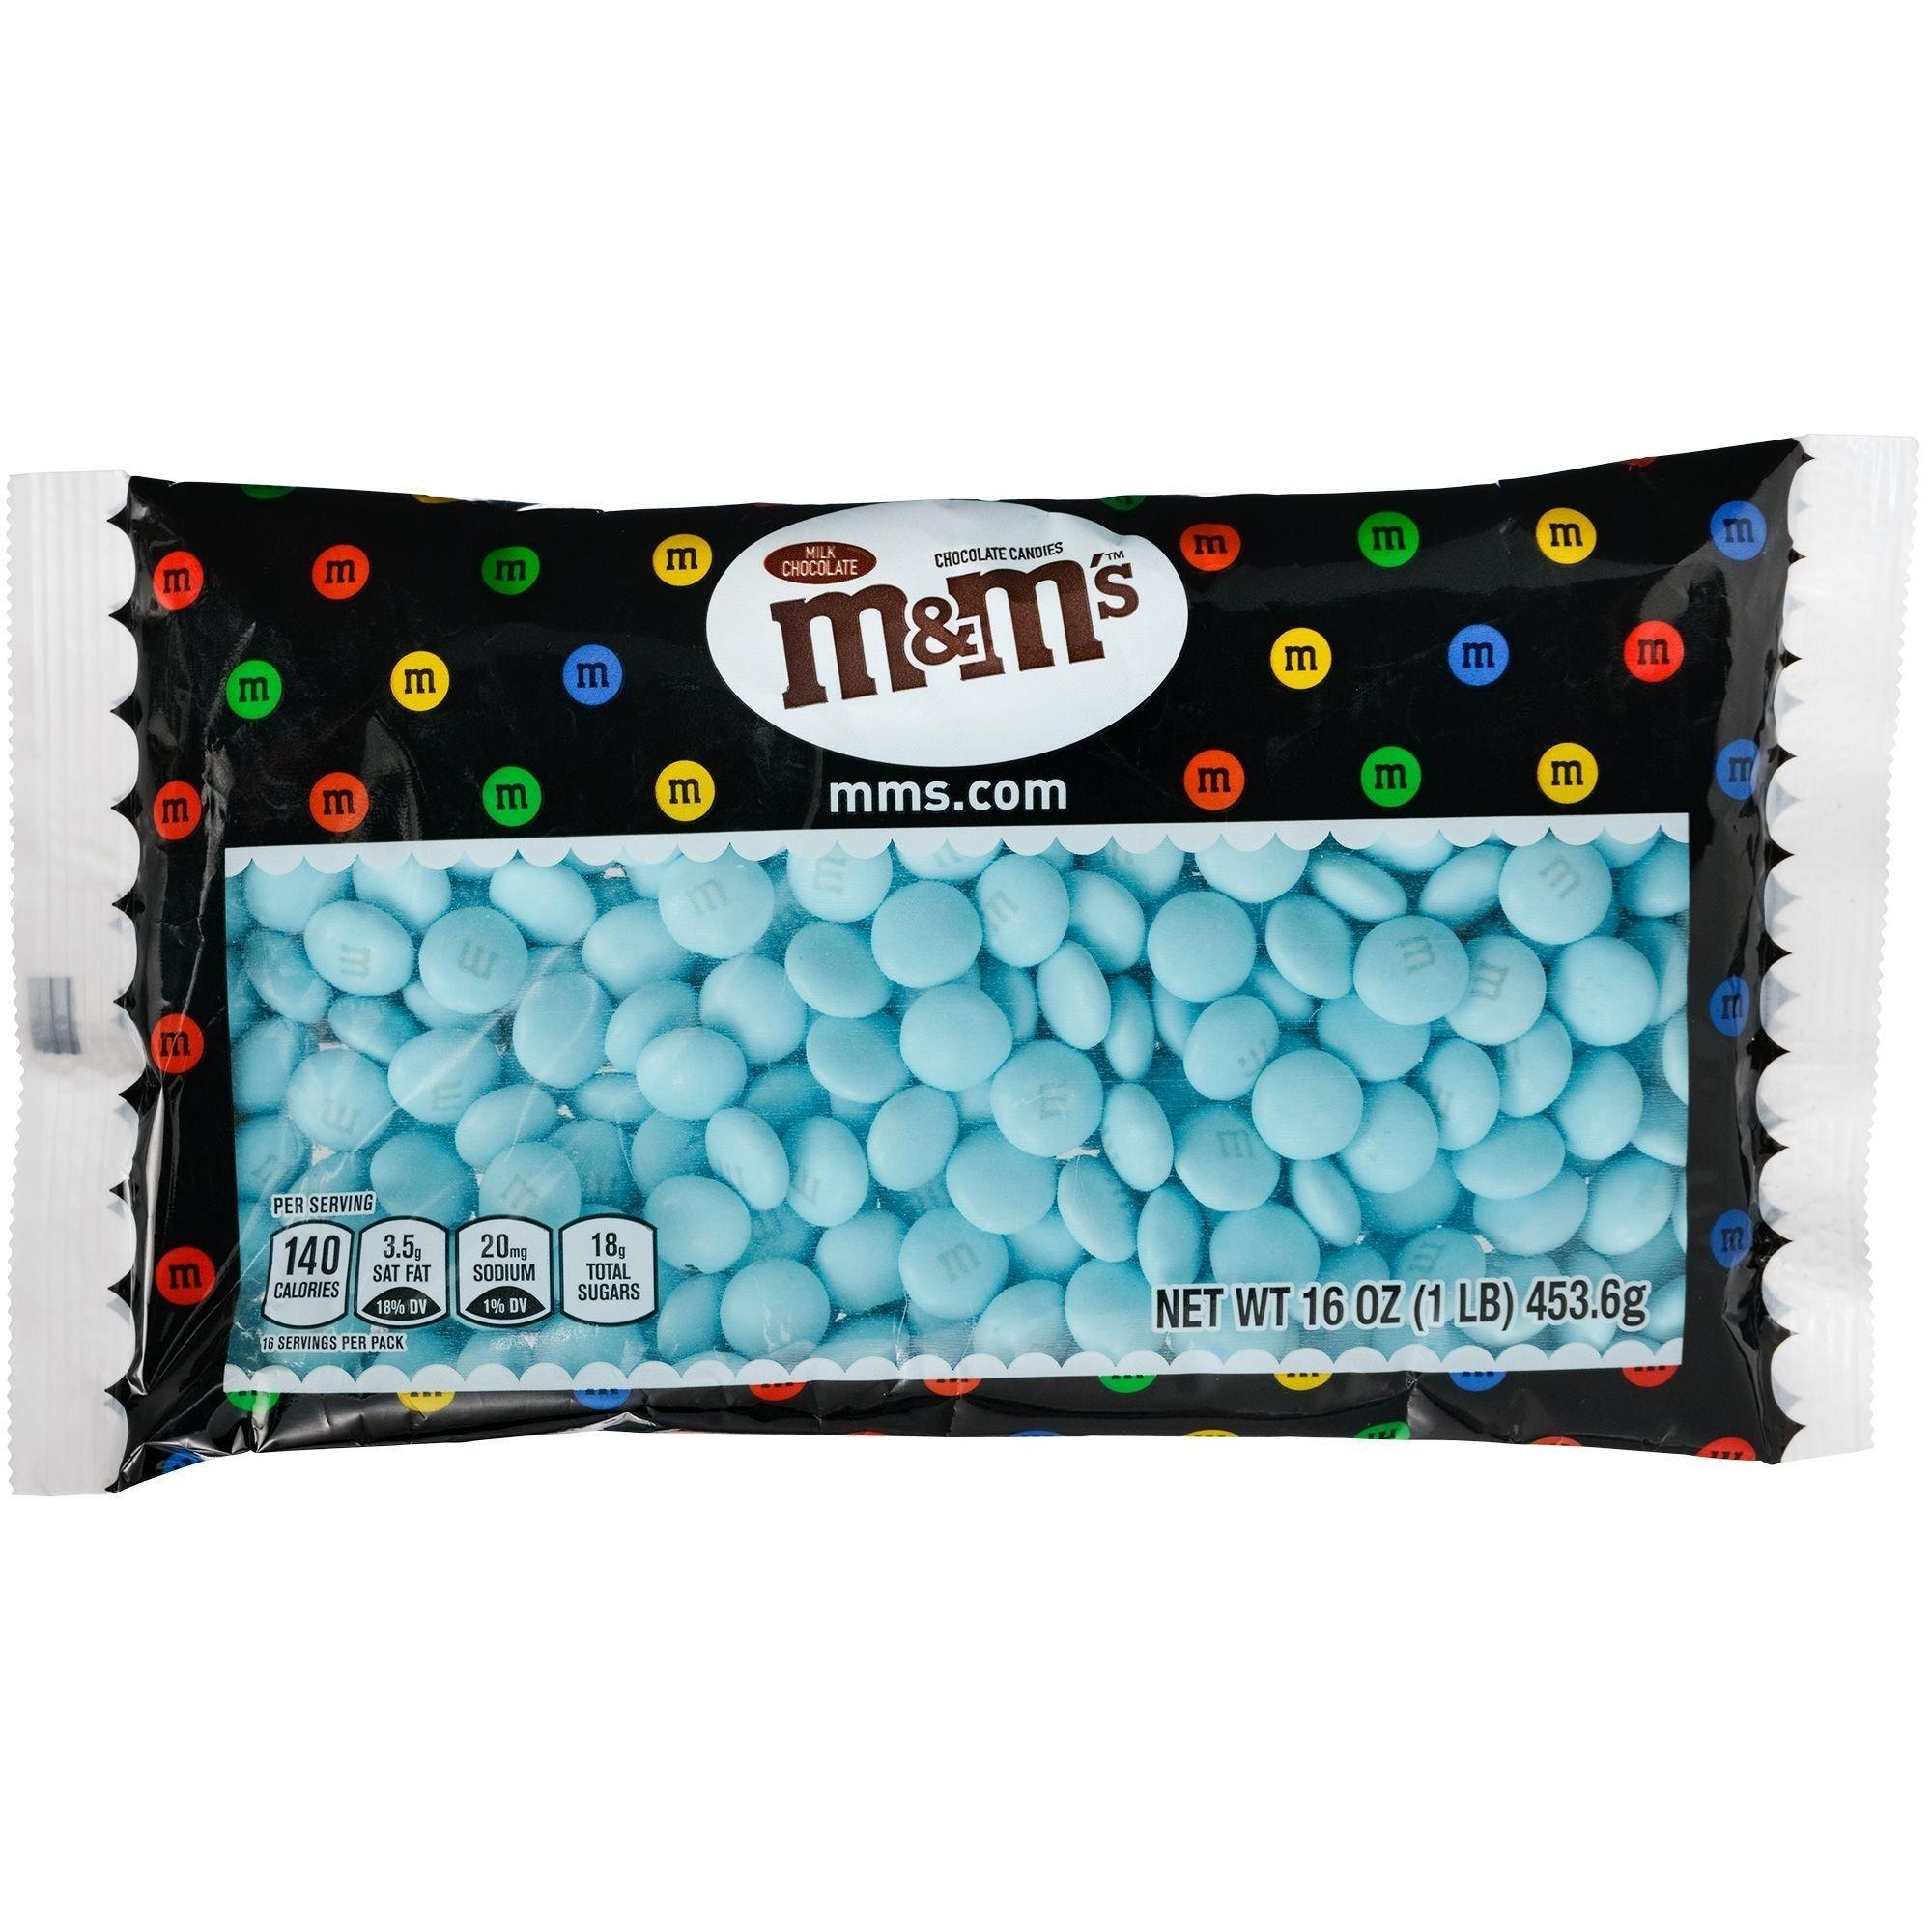 Light Blue & White M&M's Chocolate Candy - 1 lb Bag